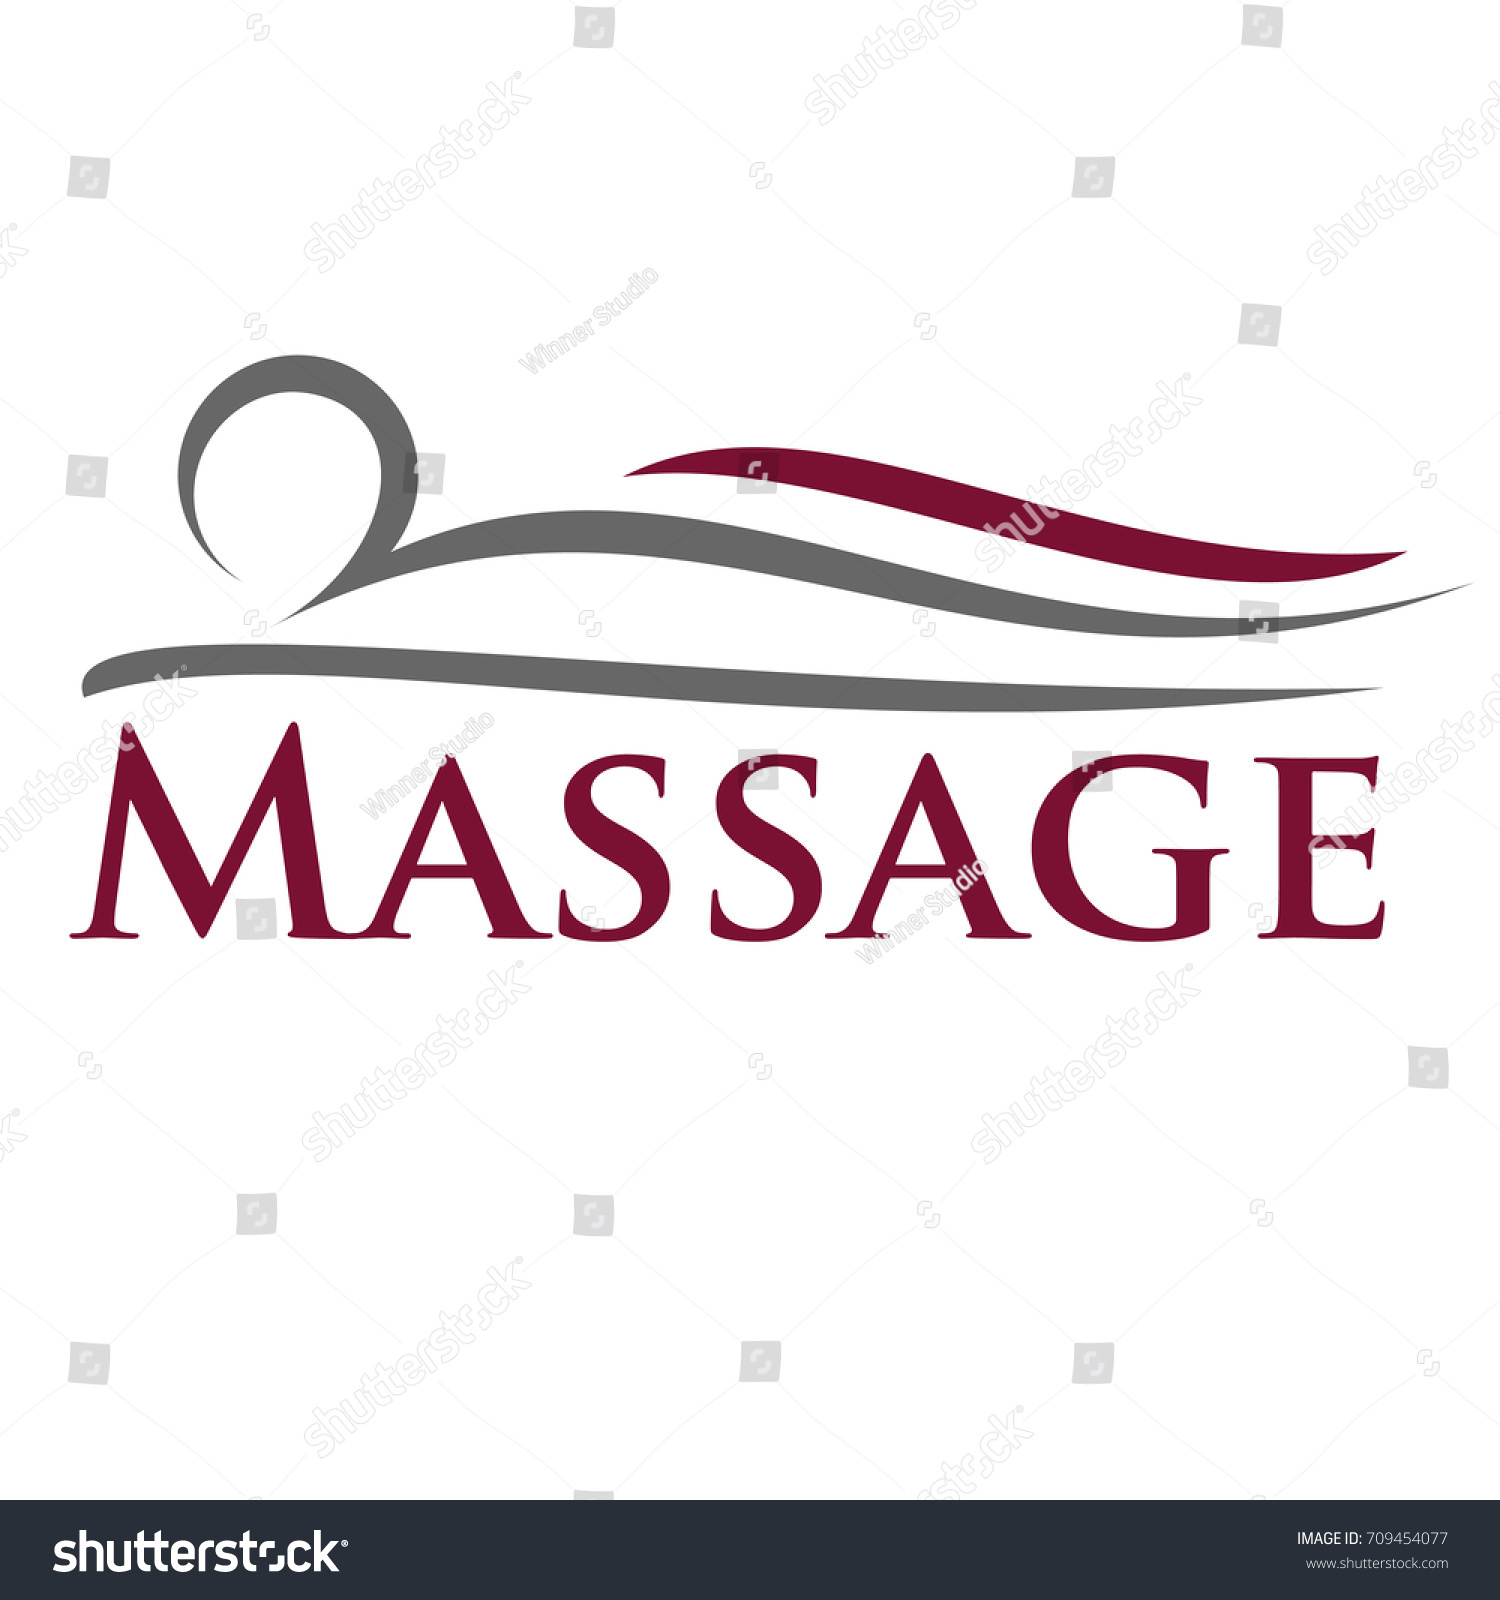 Massage Logo Vector Vetor Stock Livre De Direitos 709454077 Shutterstock 